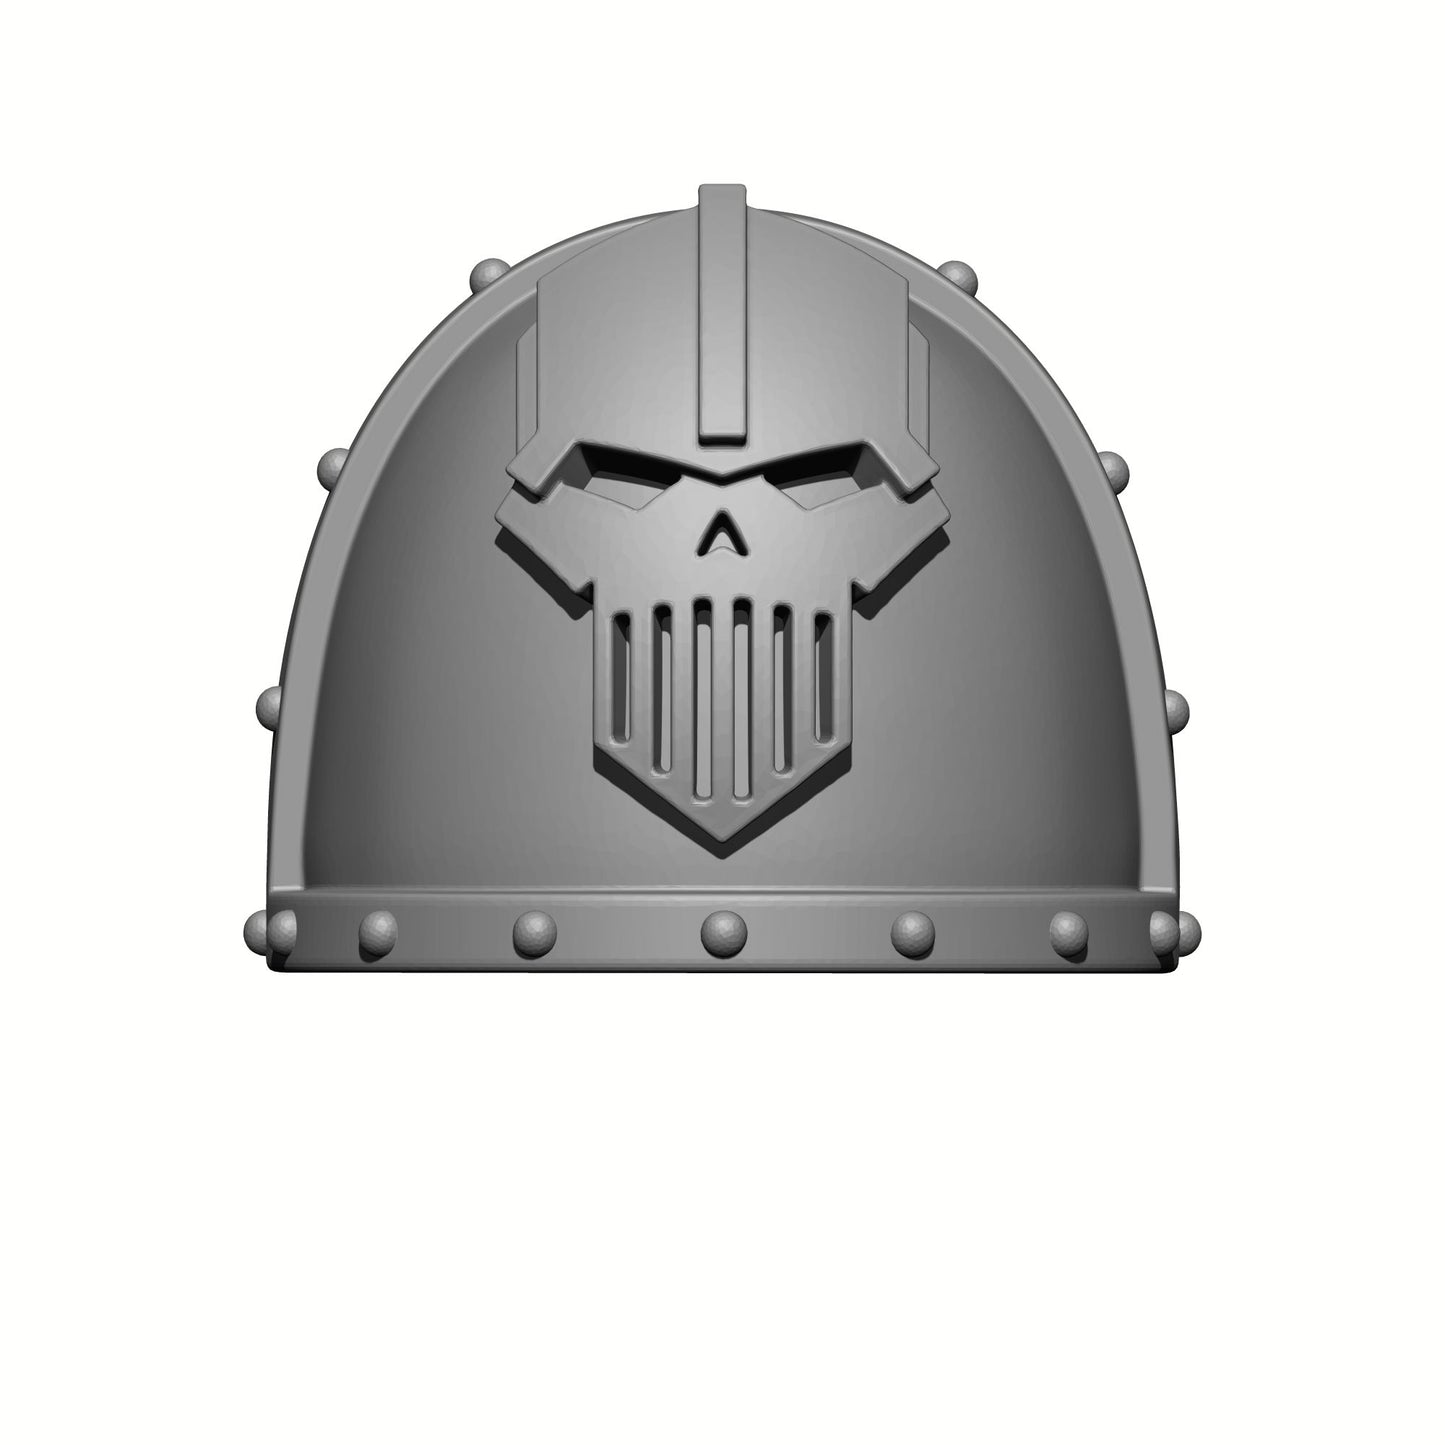 Iron Skull Legion MKVII Pauldron: Gen: 7 Shoulder Pad for JoyToy Warhammer 40K Compatible Space Marine 1:18 4" Action Figures